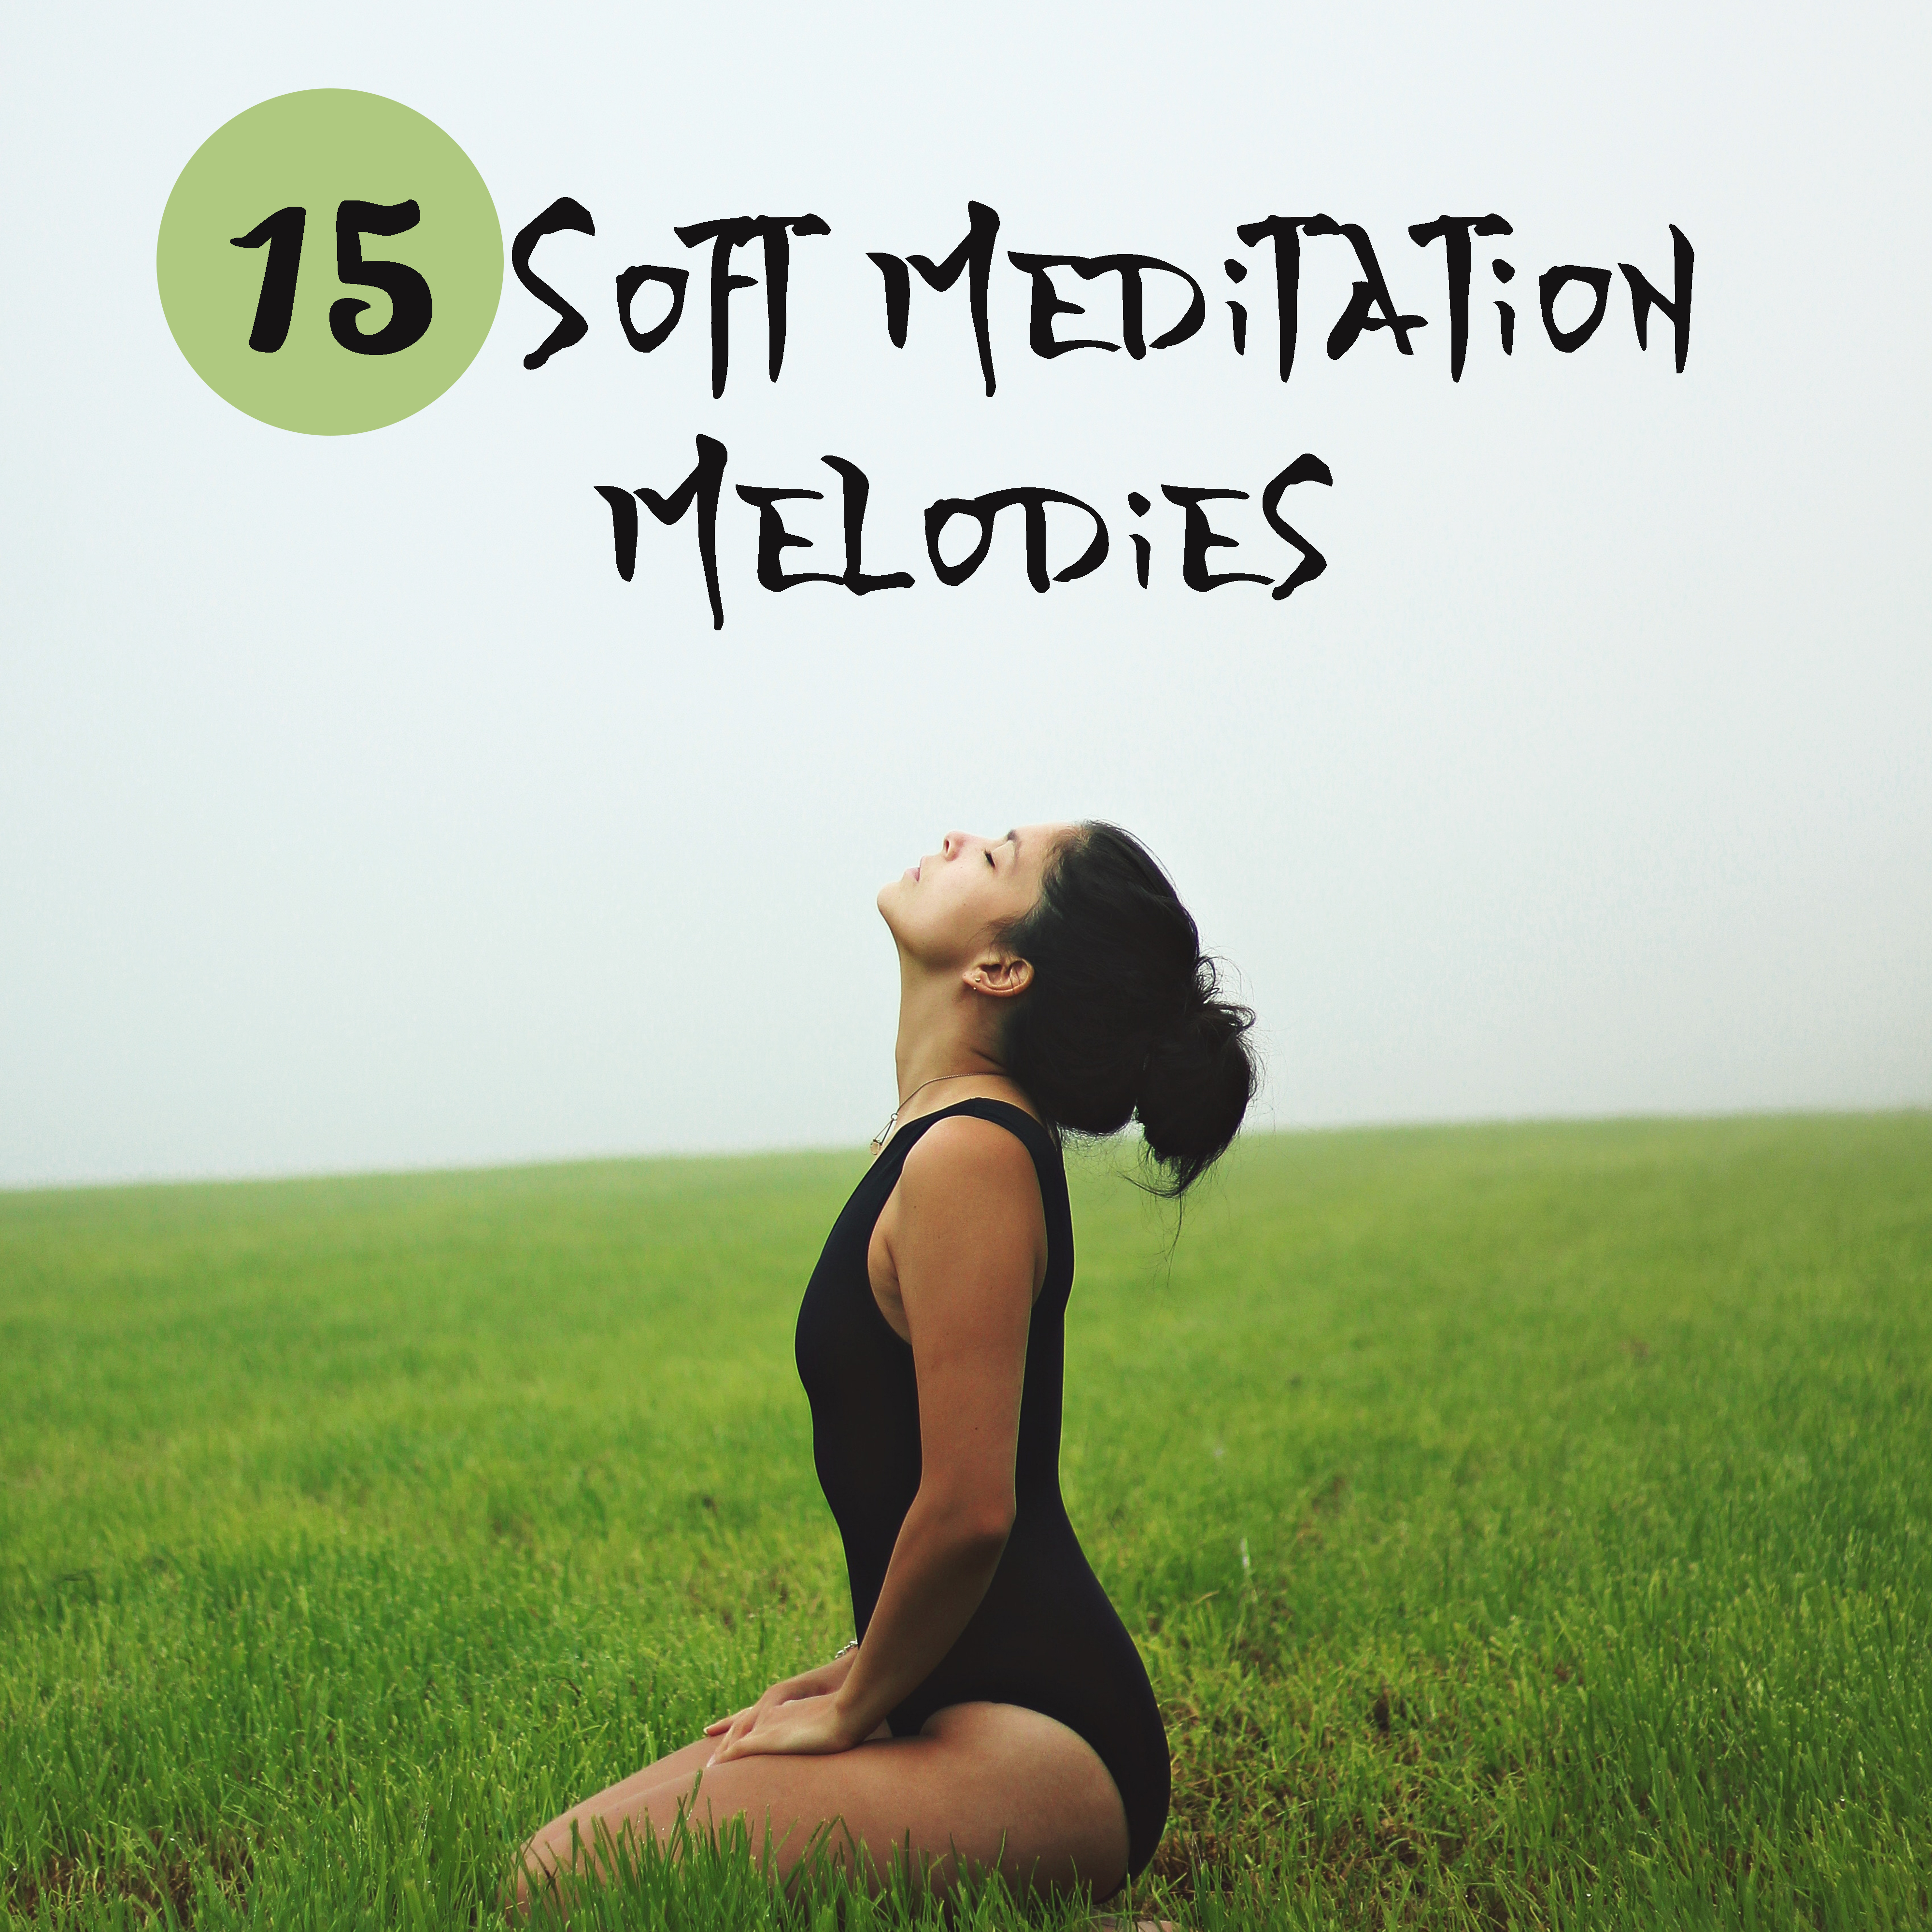 15 Soft Meditation Melodies